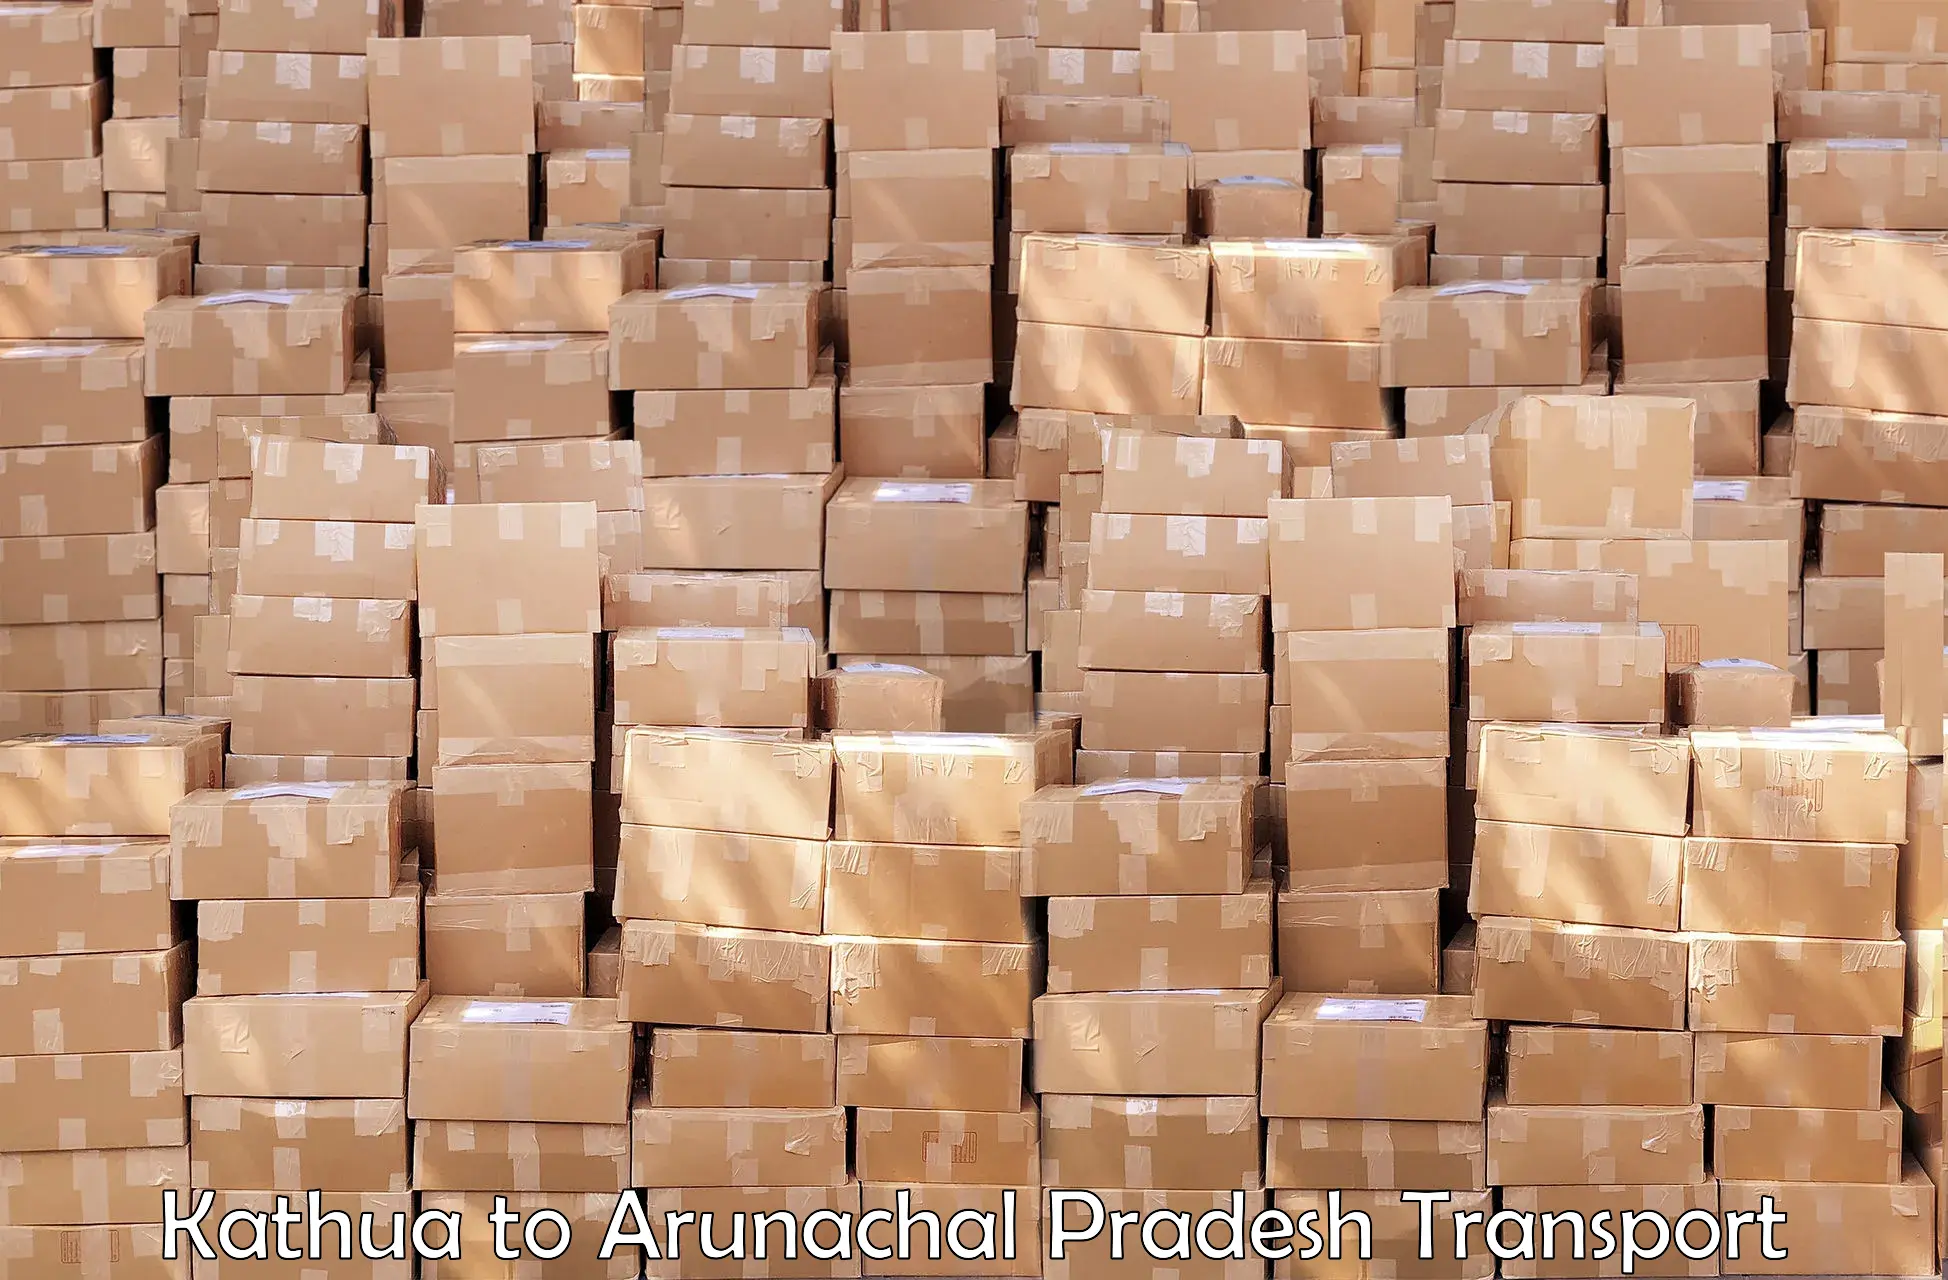 Truck transport companies in India Kathua to Arunachal Pradesh